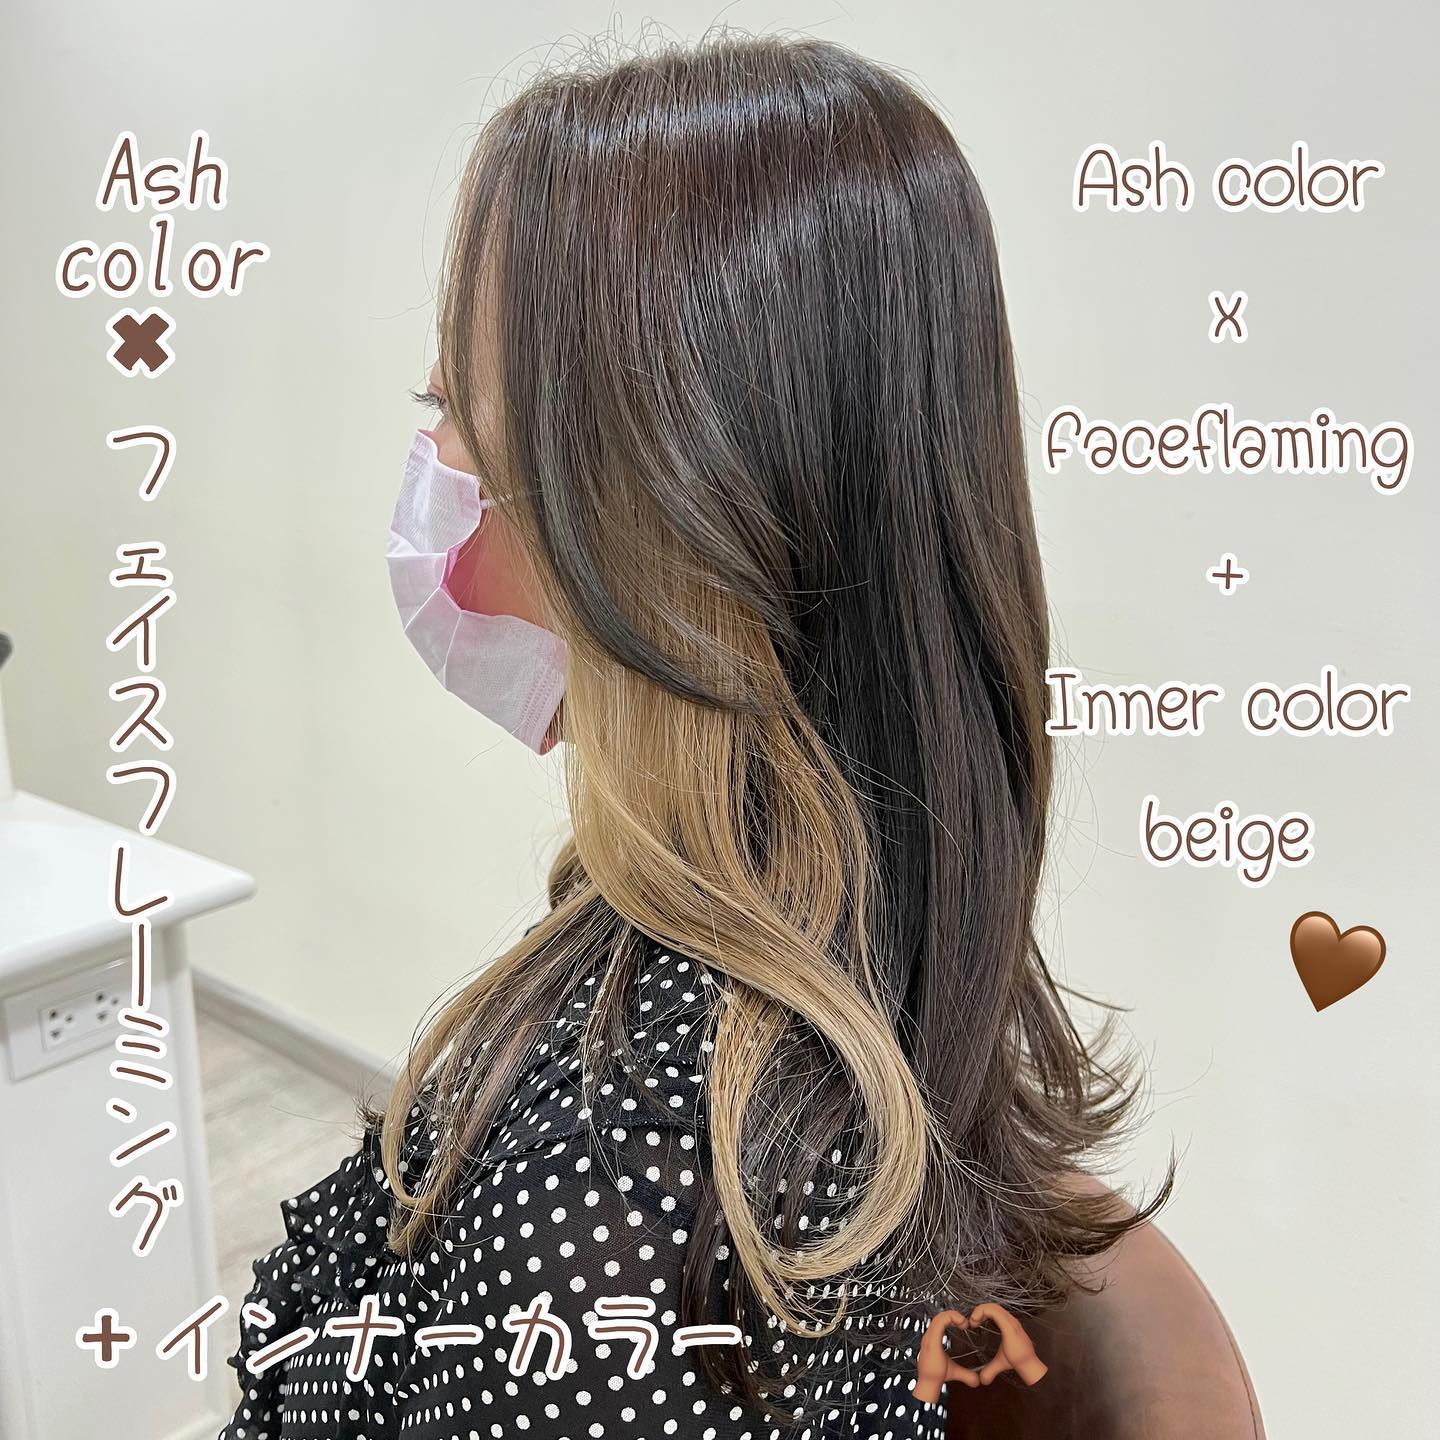 Inner Color ที่กำลังฮิต ไม่ว่าจะเป็นคนไทยหรือชาวญี่ปุ่น ทำให้ได้สีผมที่ไม่ซ้ำใคร🫶🏽ทำสีนี้แล้วได้ลุคสาวหวานซ่อนเปรี้ยว หรือใครอยากจะลองสีใหม่ๆ มาให้ช่างช่วยเลือกได้เลยนะคะ YAMS ยินดีต้อนรับเสมอเลยค่าา️  Stylist HIROMI  YAMS hair&cafe  For booking/ご予約、お問い合わせ↓
LINE ID:@qai5573z
Tel:02-163-4973  Business hours/営業時間↓
9:00 - 18:00
Closed on Wednesday,2nd & 4th Thursday  #ร้านทำผมญี่ปุ่น #YAMShaircafe #ตัดผมญี่ปุ่น #ยืดผมญี่ปุ่น #ดัดผมญี่ปุ่น #ร้านทำผม #バンコク生活 #バンコク在住 #バンコク暮らし #バンコク子連れ美容室 #バンコク美容室 #japanesehairsalon #ร้านทำสีผมไม่เสีย #ออกแบบทรงผม #สีผมอินเทรนด์ #ร้านทำผมแนะนำ #ช่างญี่ปุ่น